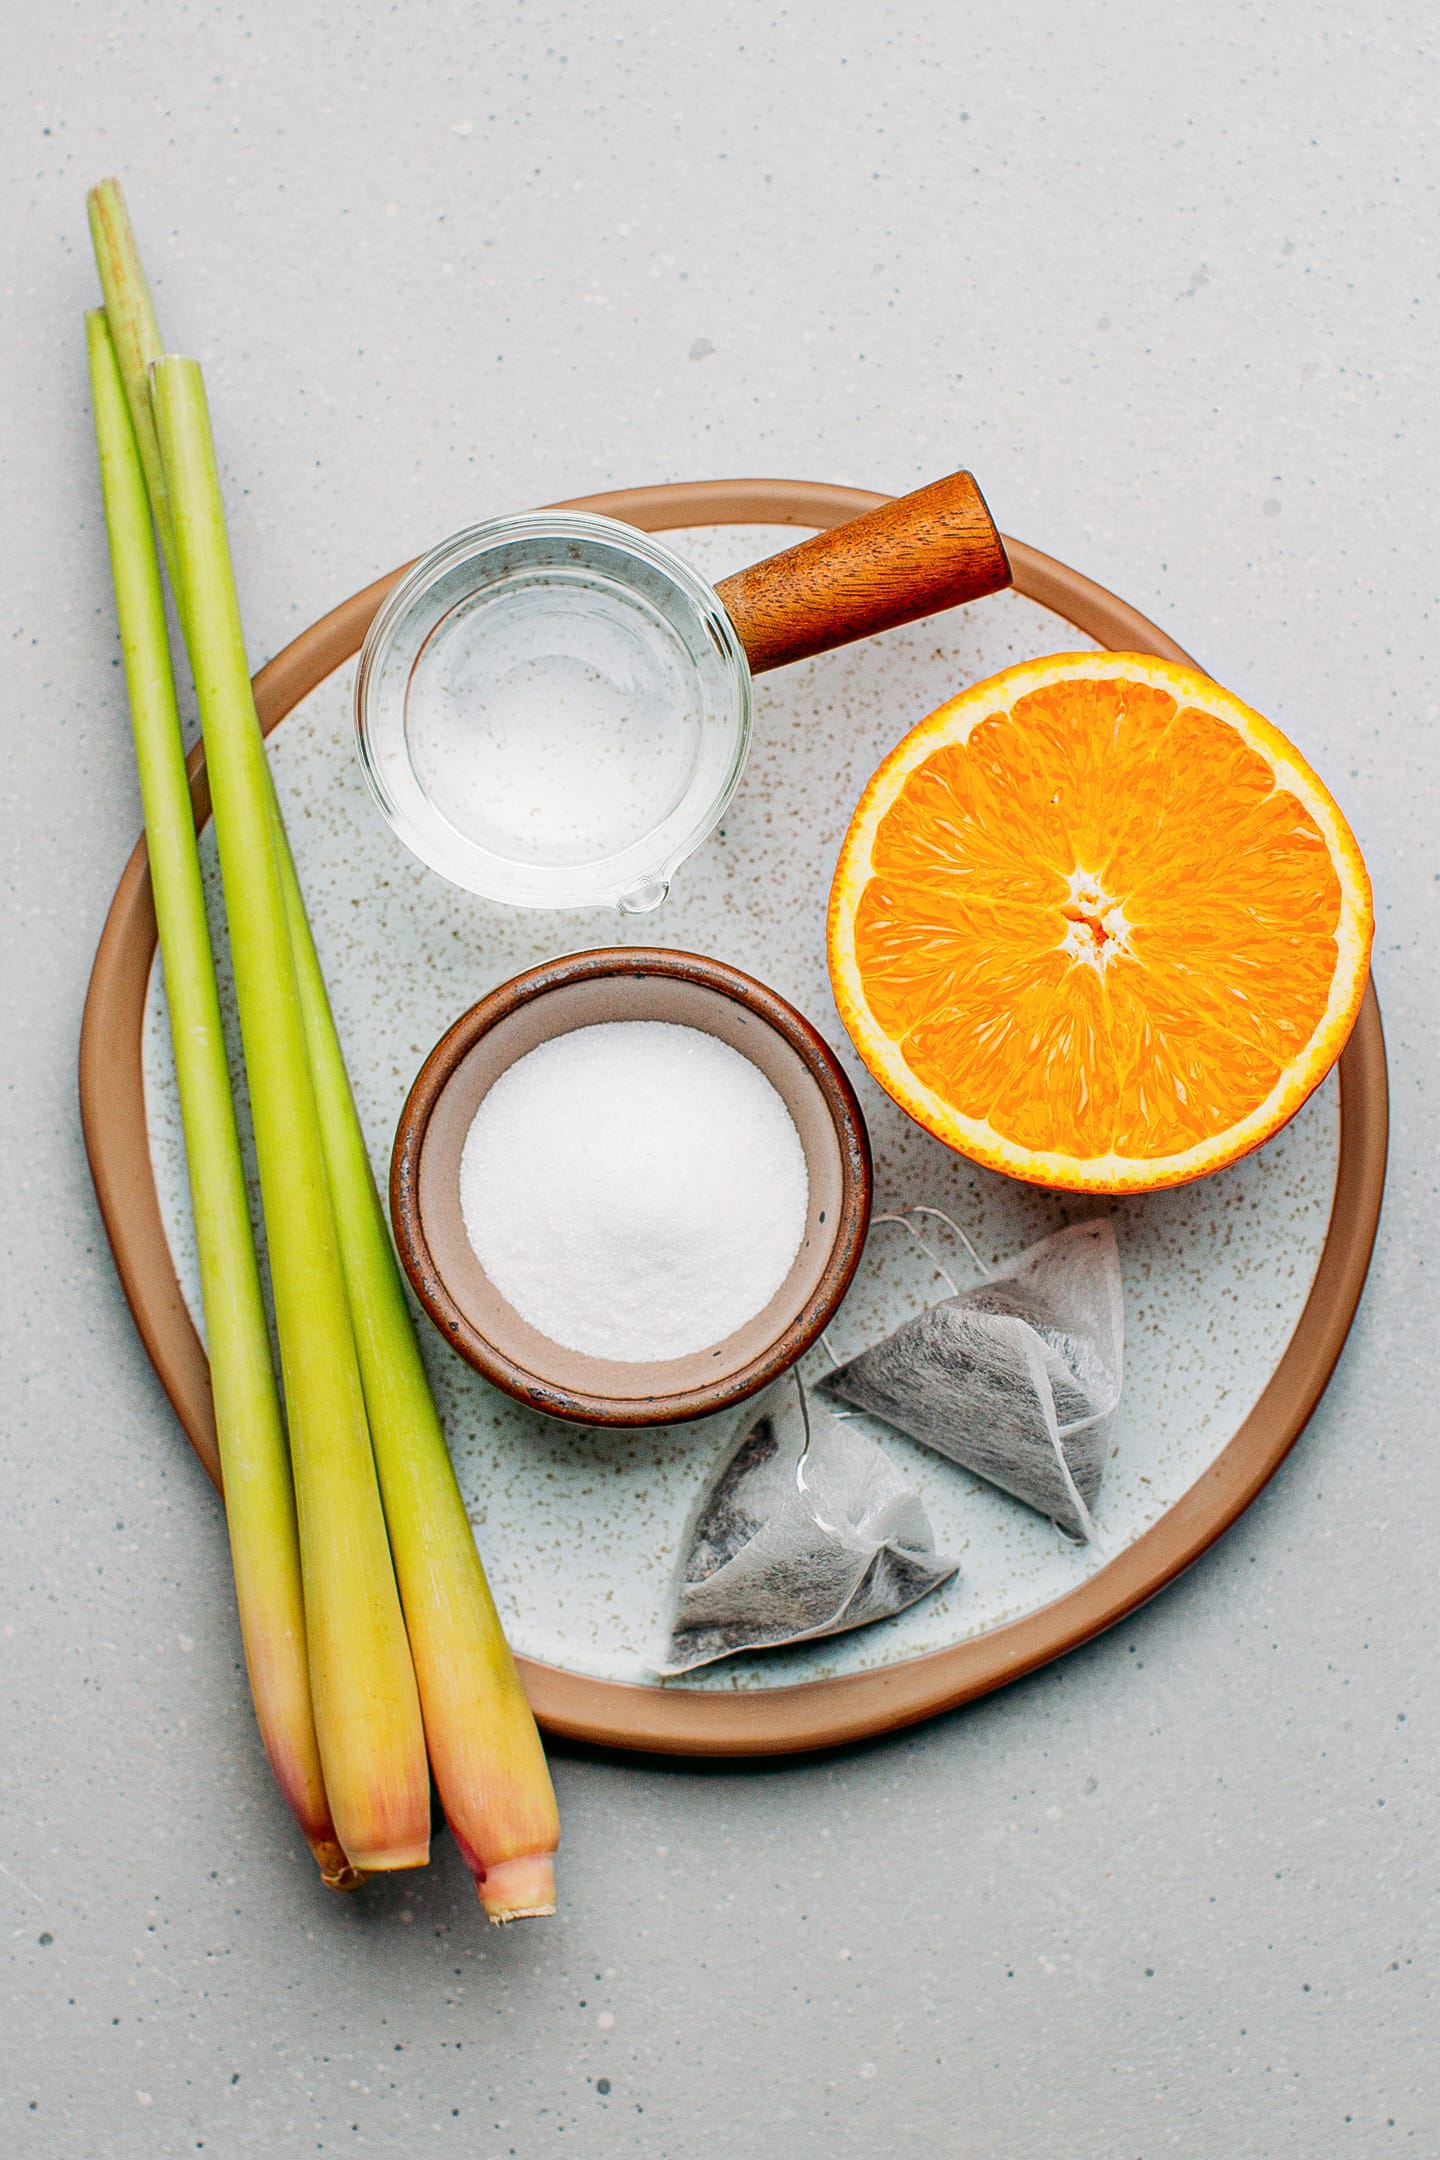 Ingredients like lemongrass stalks, orange, tea bags, and sugar.